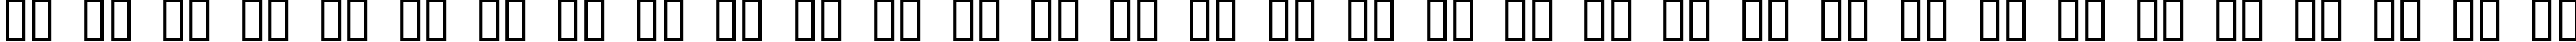 Пример написания русского алфавита шрифтом Baseball